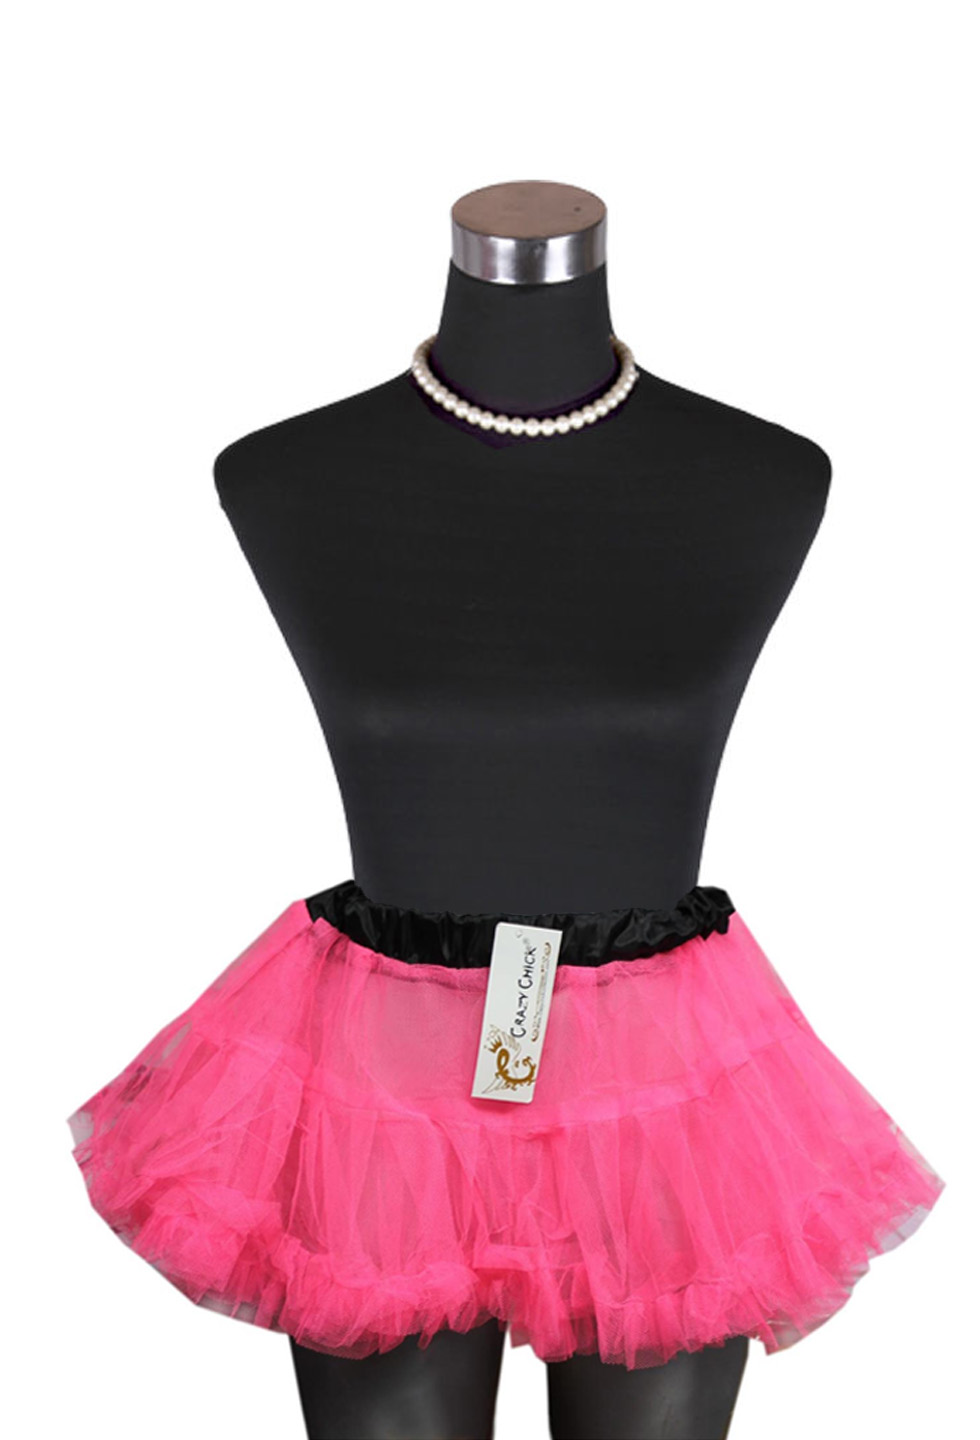 Crazy Chick Girls Dance Wear Chiffon Pink Petticoat Tutu Skirt 